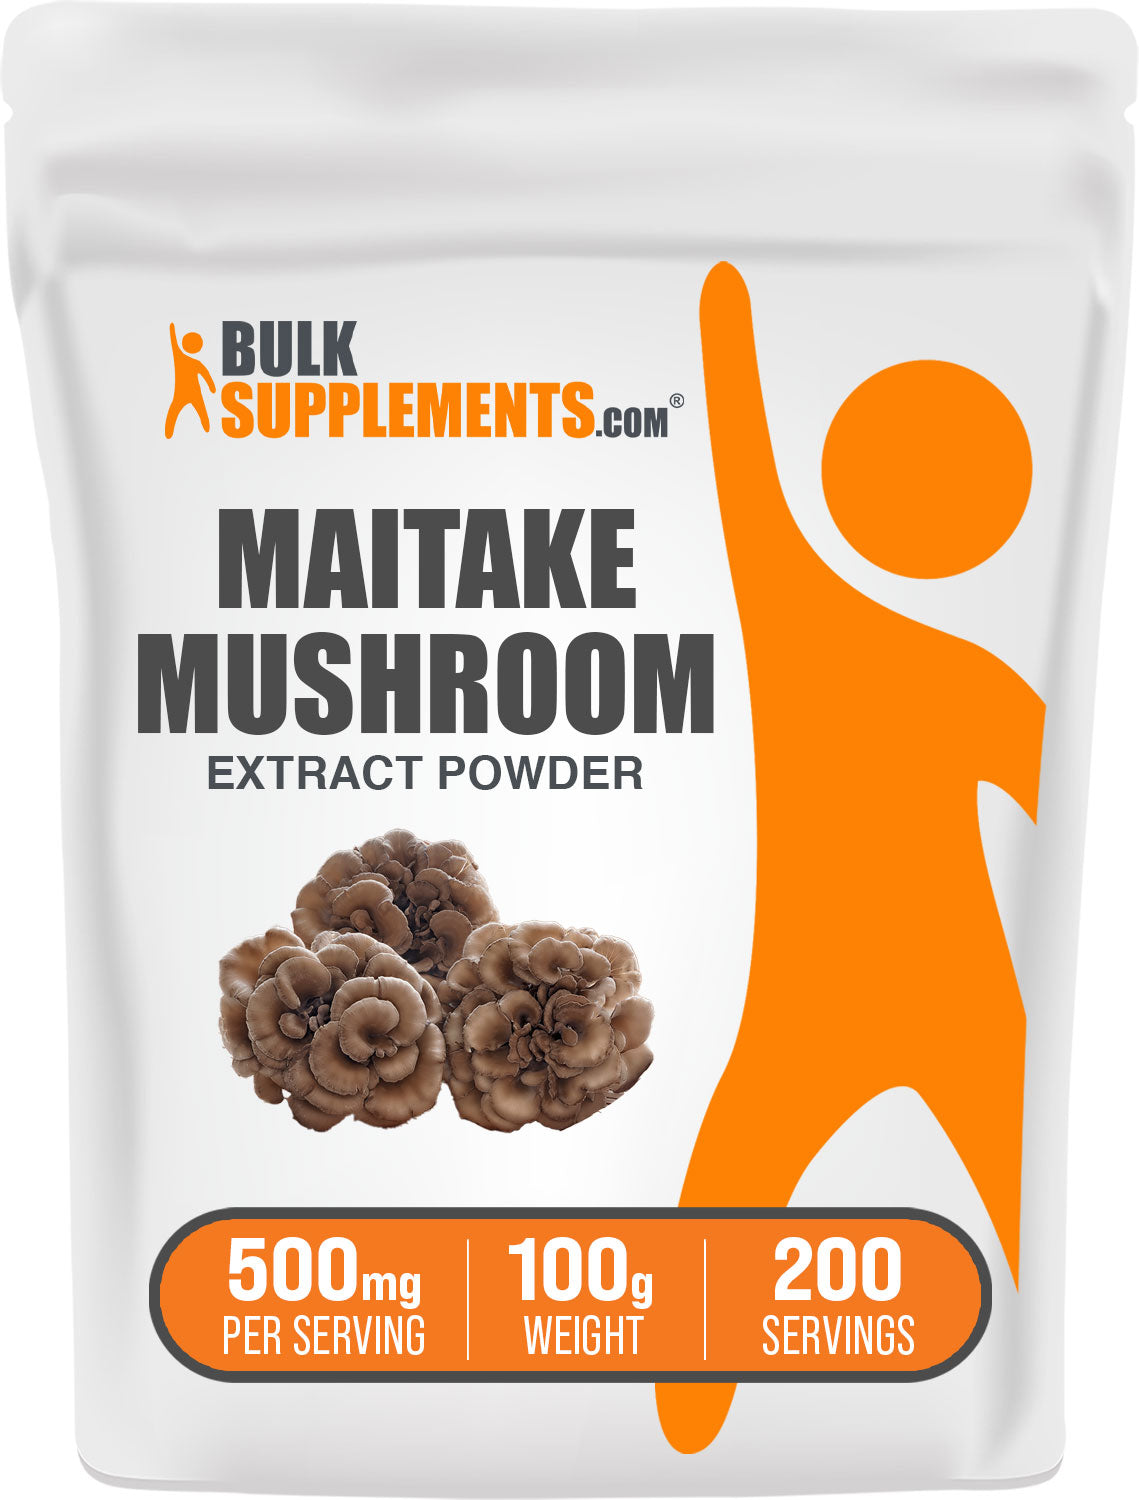 Maitake Mushroom Extract Powder 100g Bag